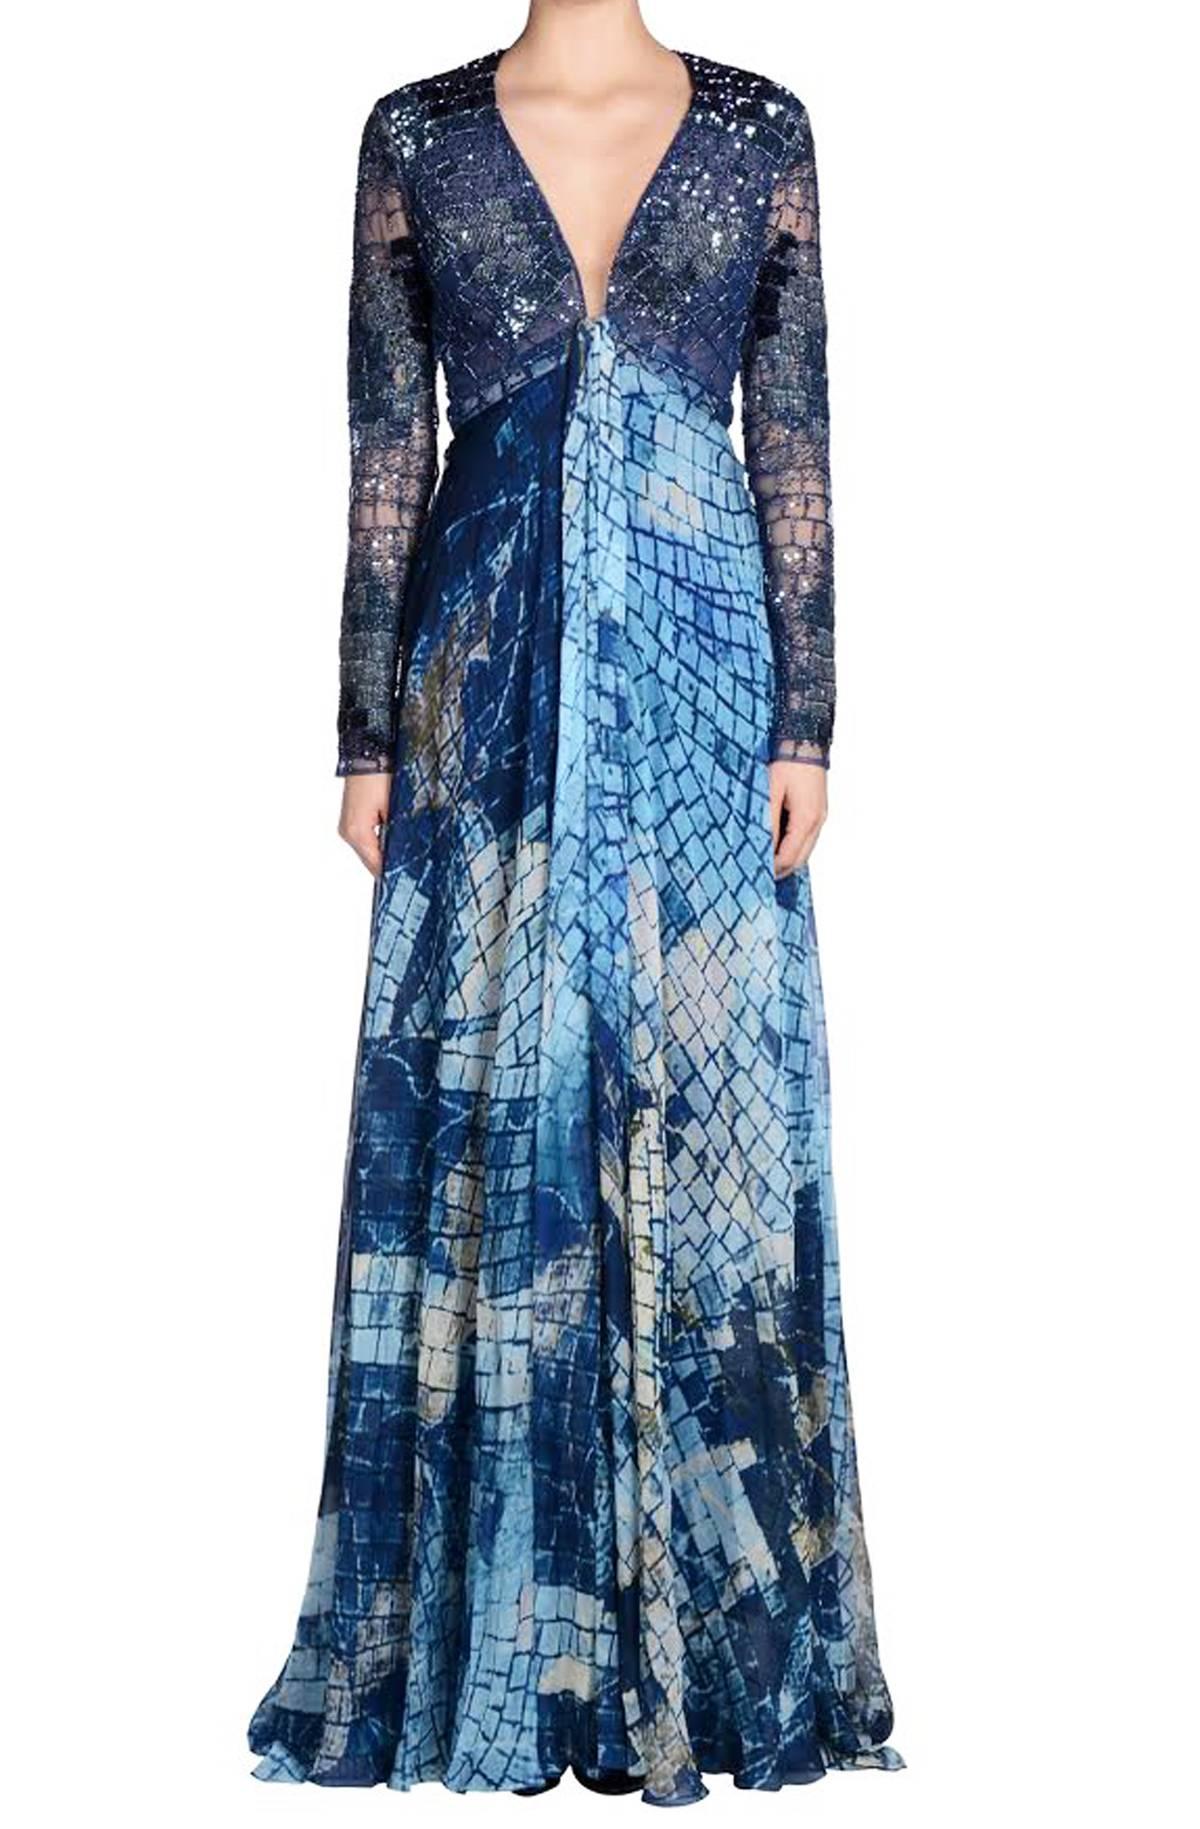 Bleu Robe italienne ZUHAIRURAD embellie bleu océan 38 - US 2, neuve avec étiquette en vente